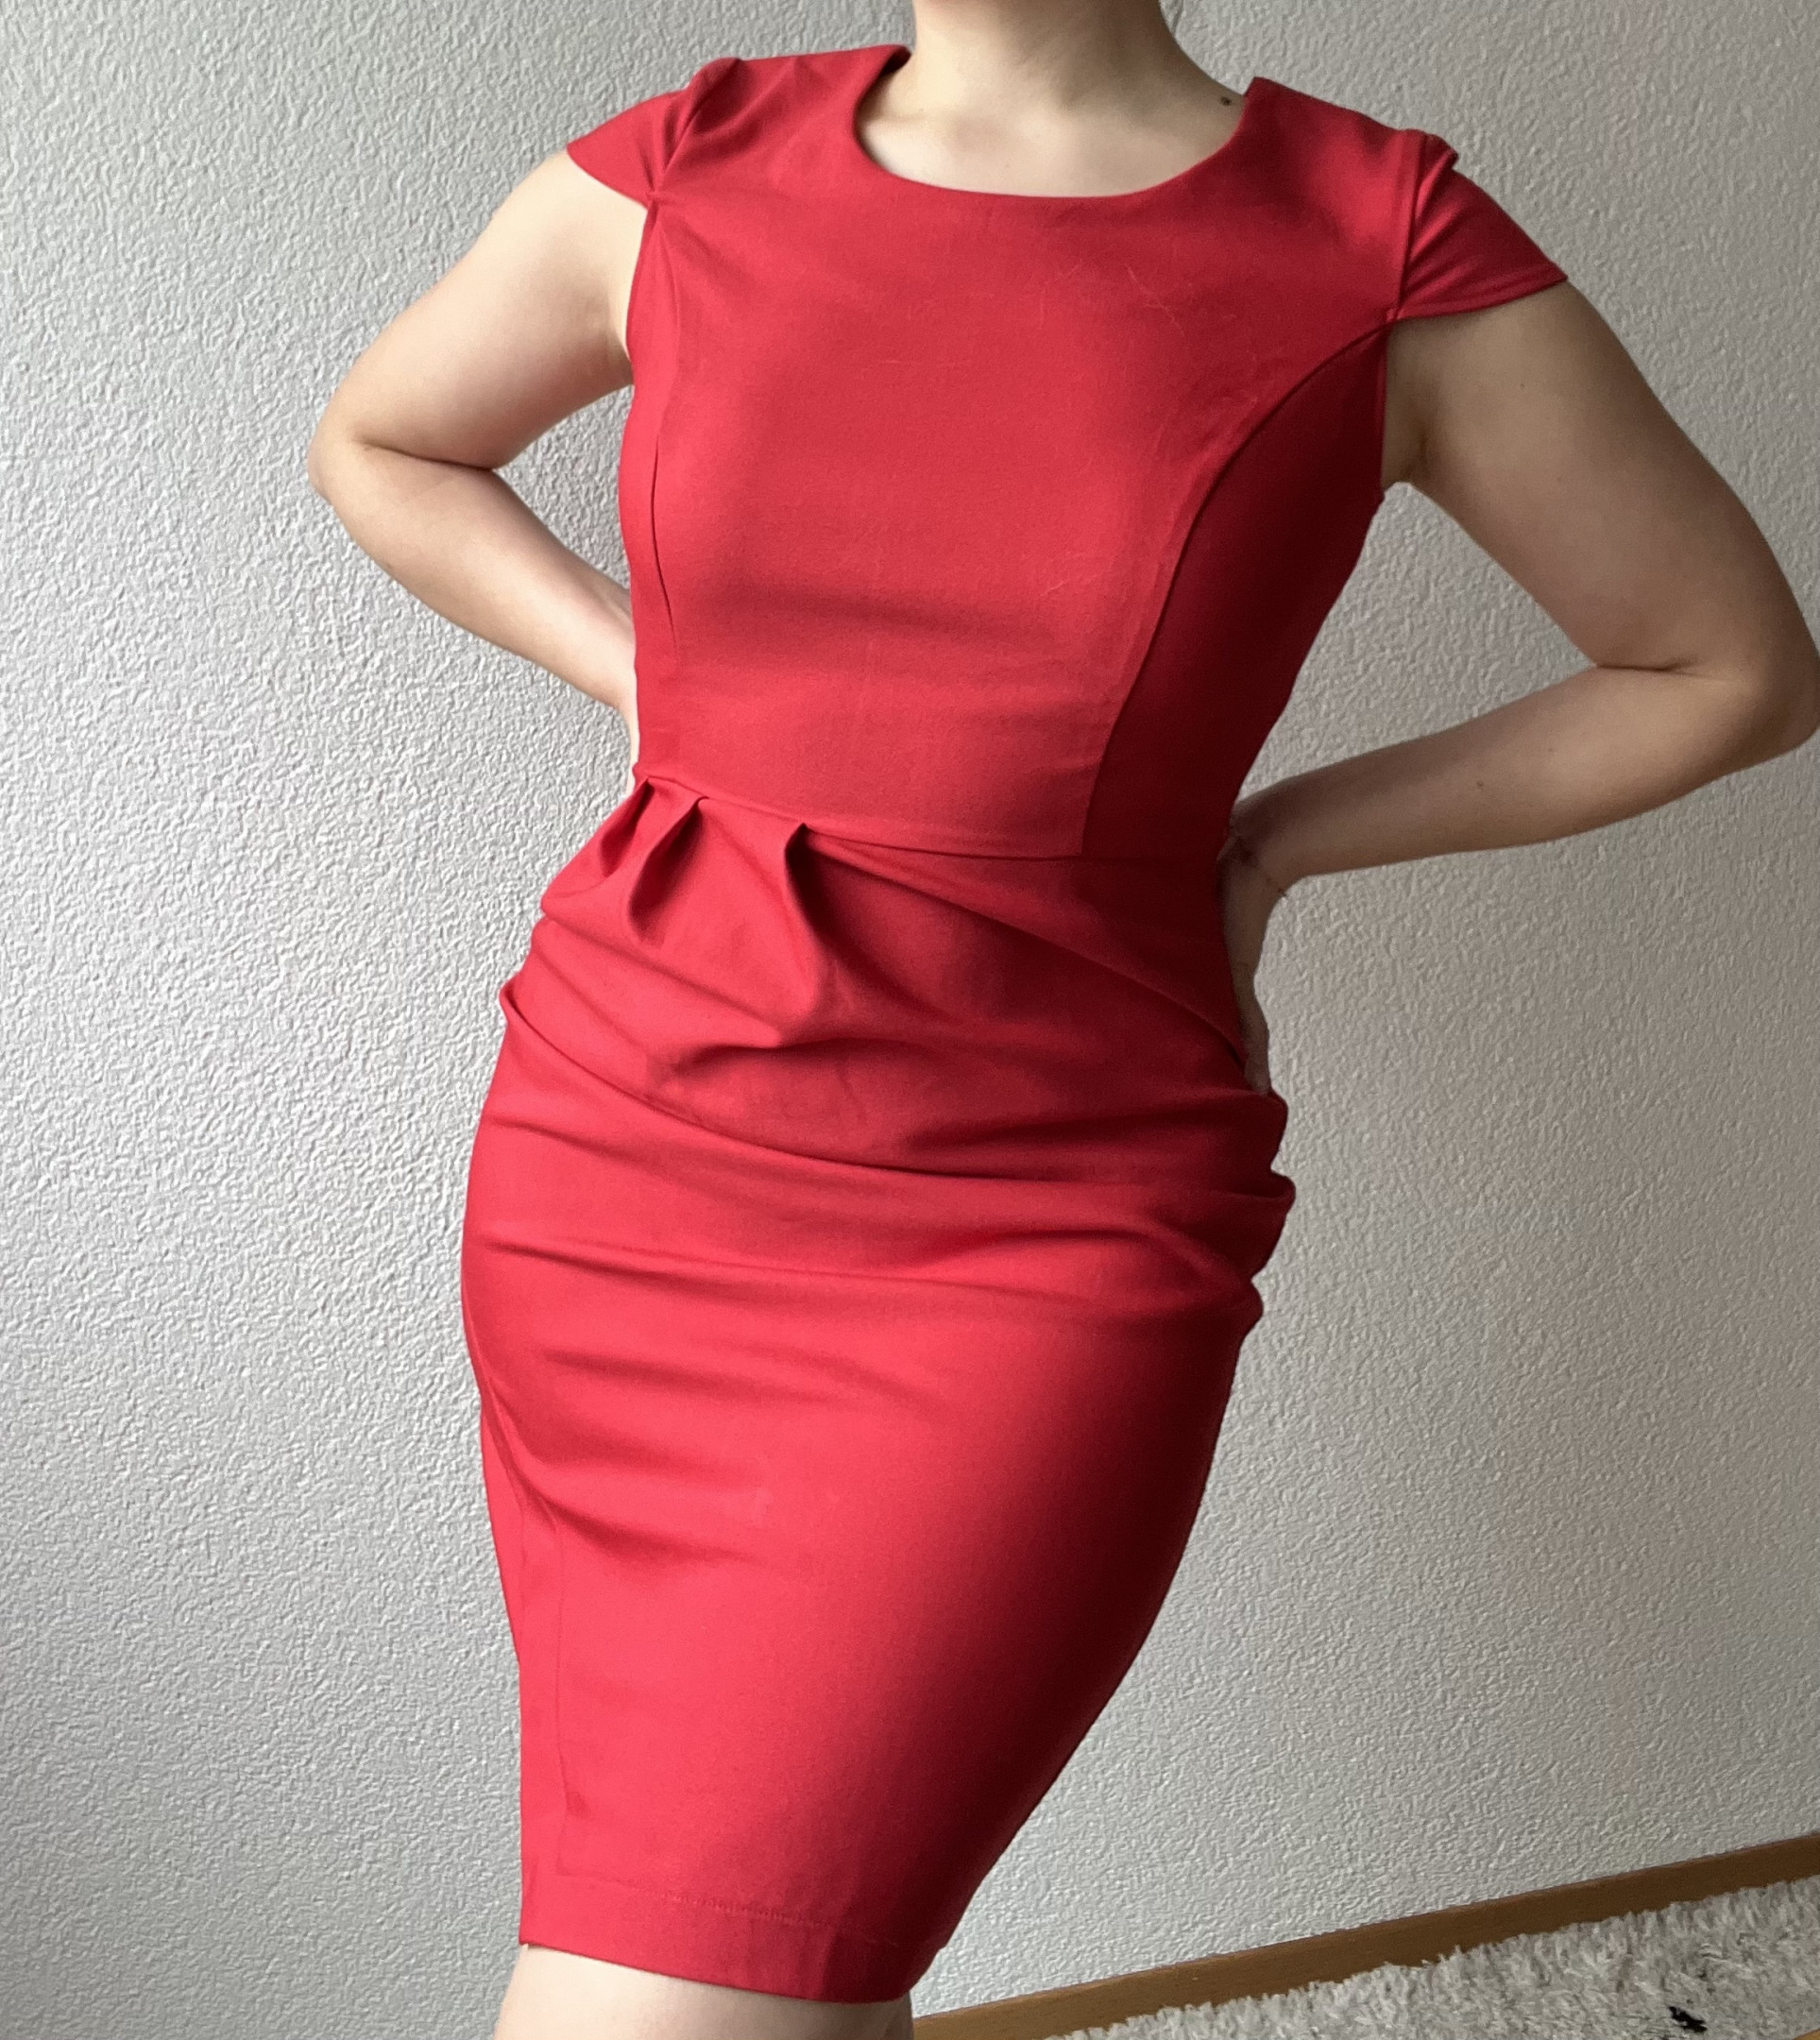 Elegant red dress